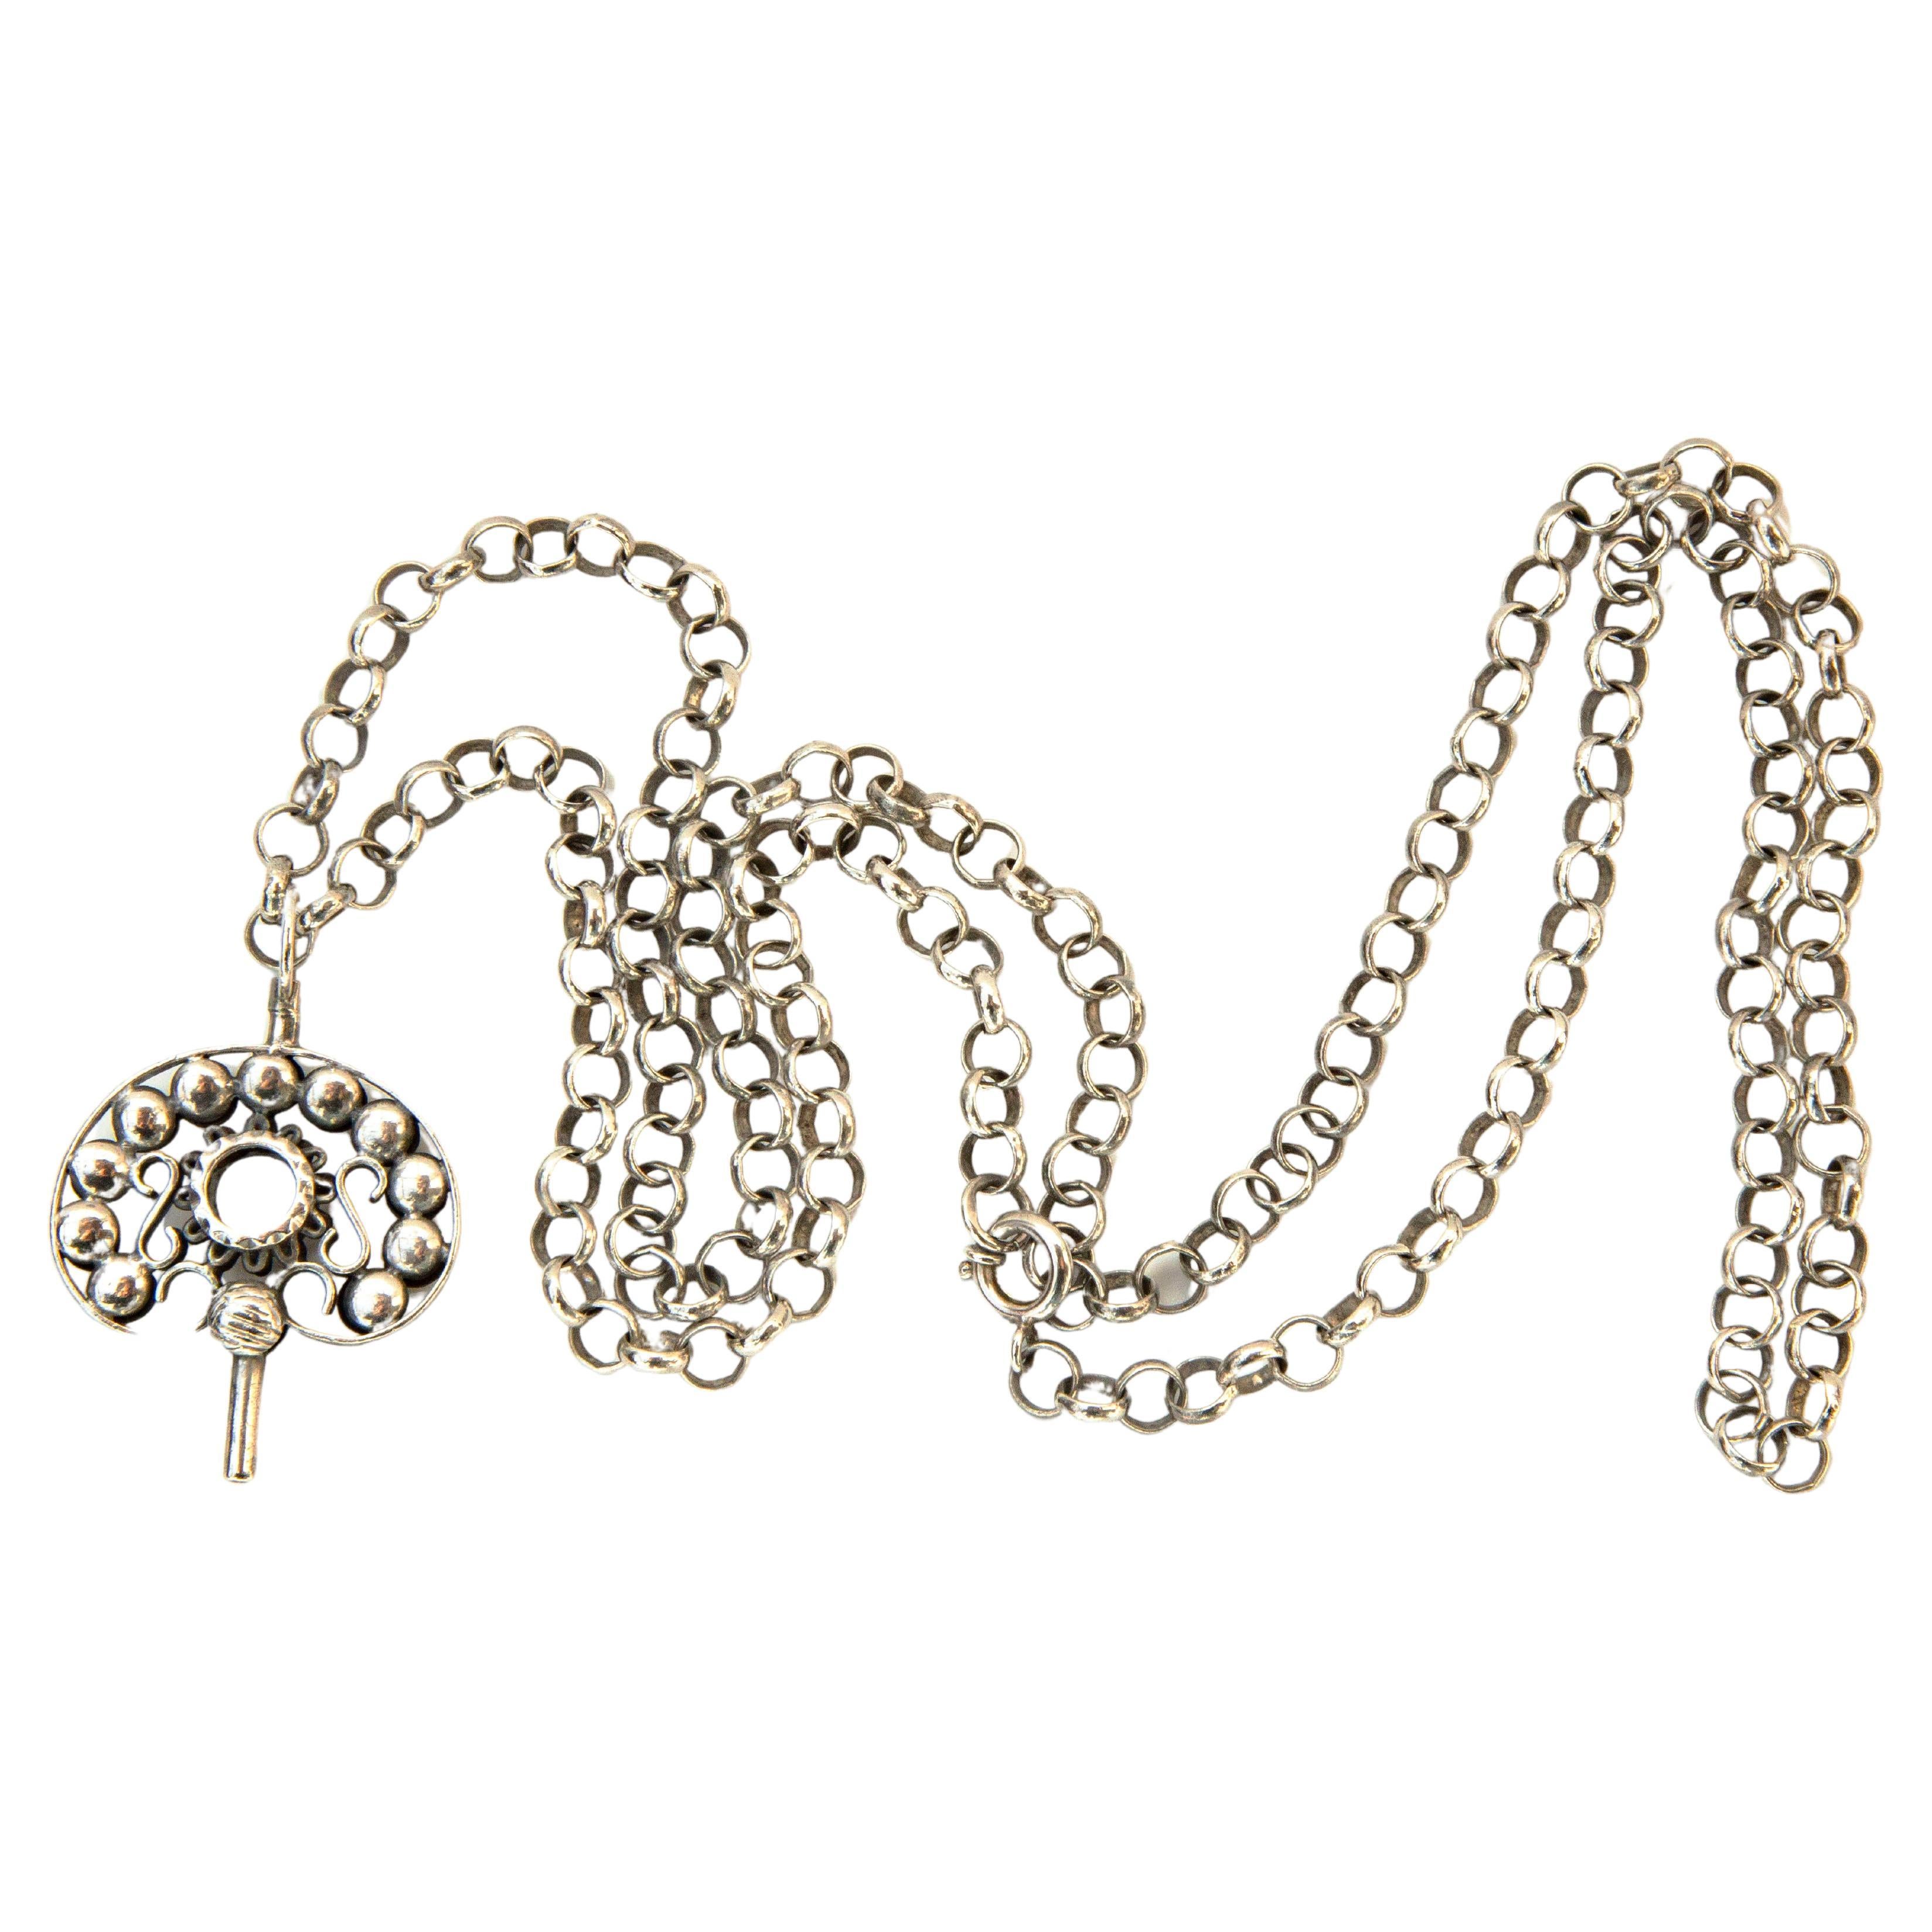 Antique XL 835 Silver Jasseron Necklace (80 cm) with Antique Silver Watch Key For Sale